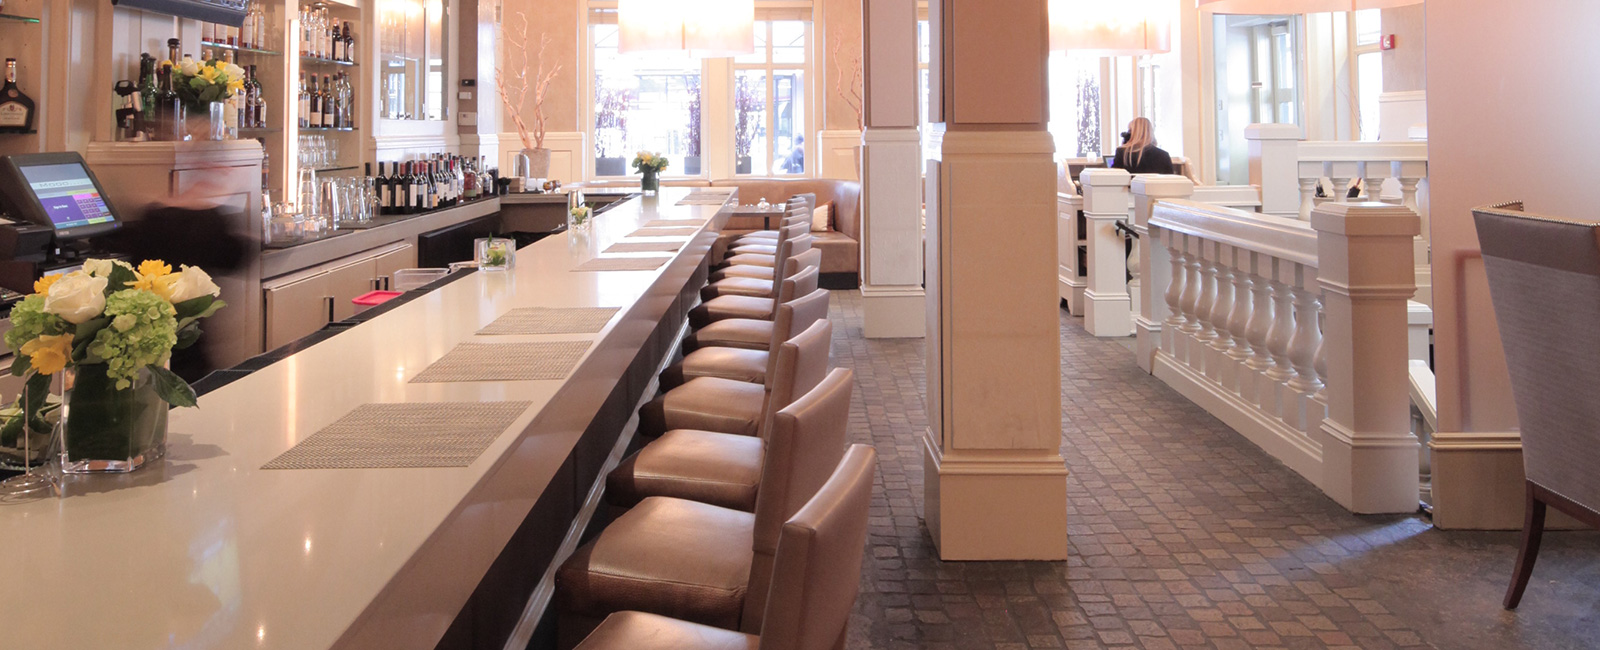 Mooo Restaurant Bar and Lounge area with cobblestone floors